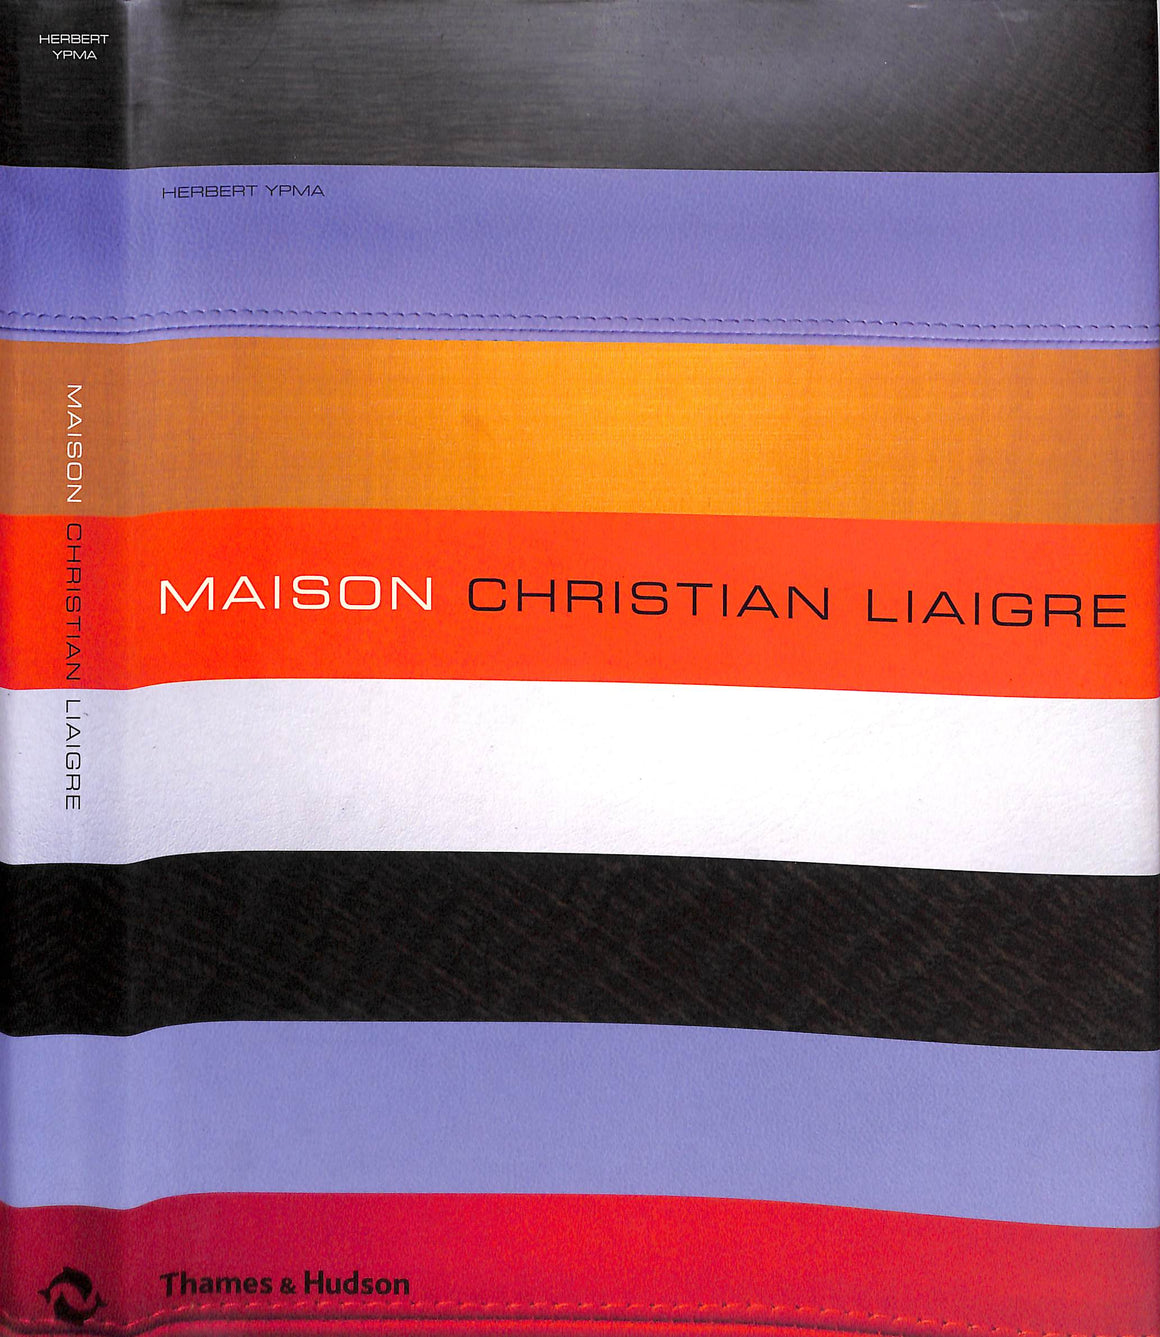 "Maison Christian Liaigre" 2004 YPMA, Herbert